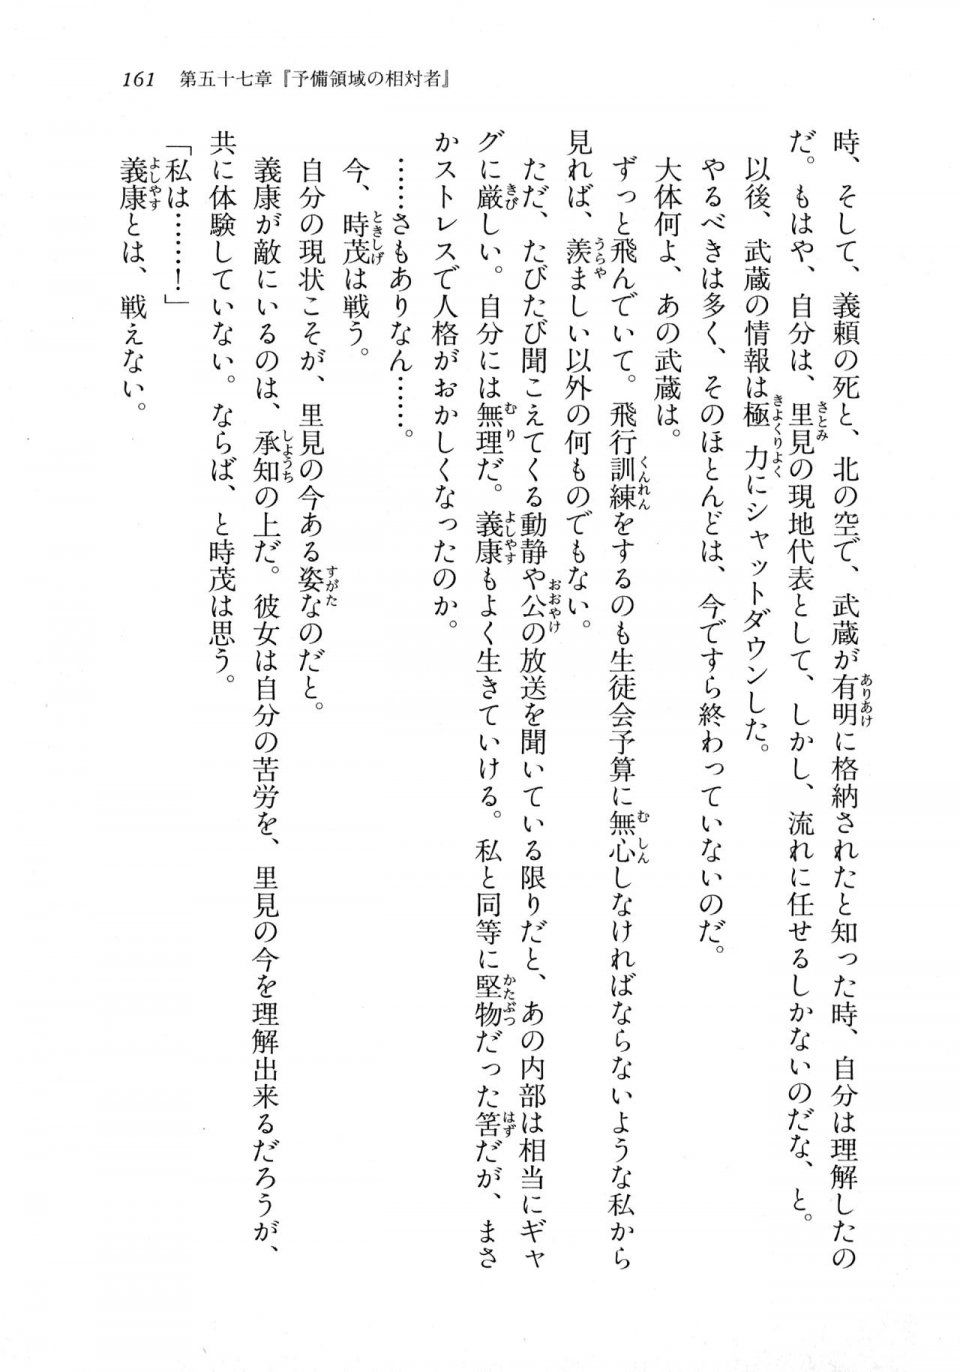 Kyoukai Senjou no Horizon LN Vol 18(7C) Part 1 - Photo #161